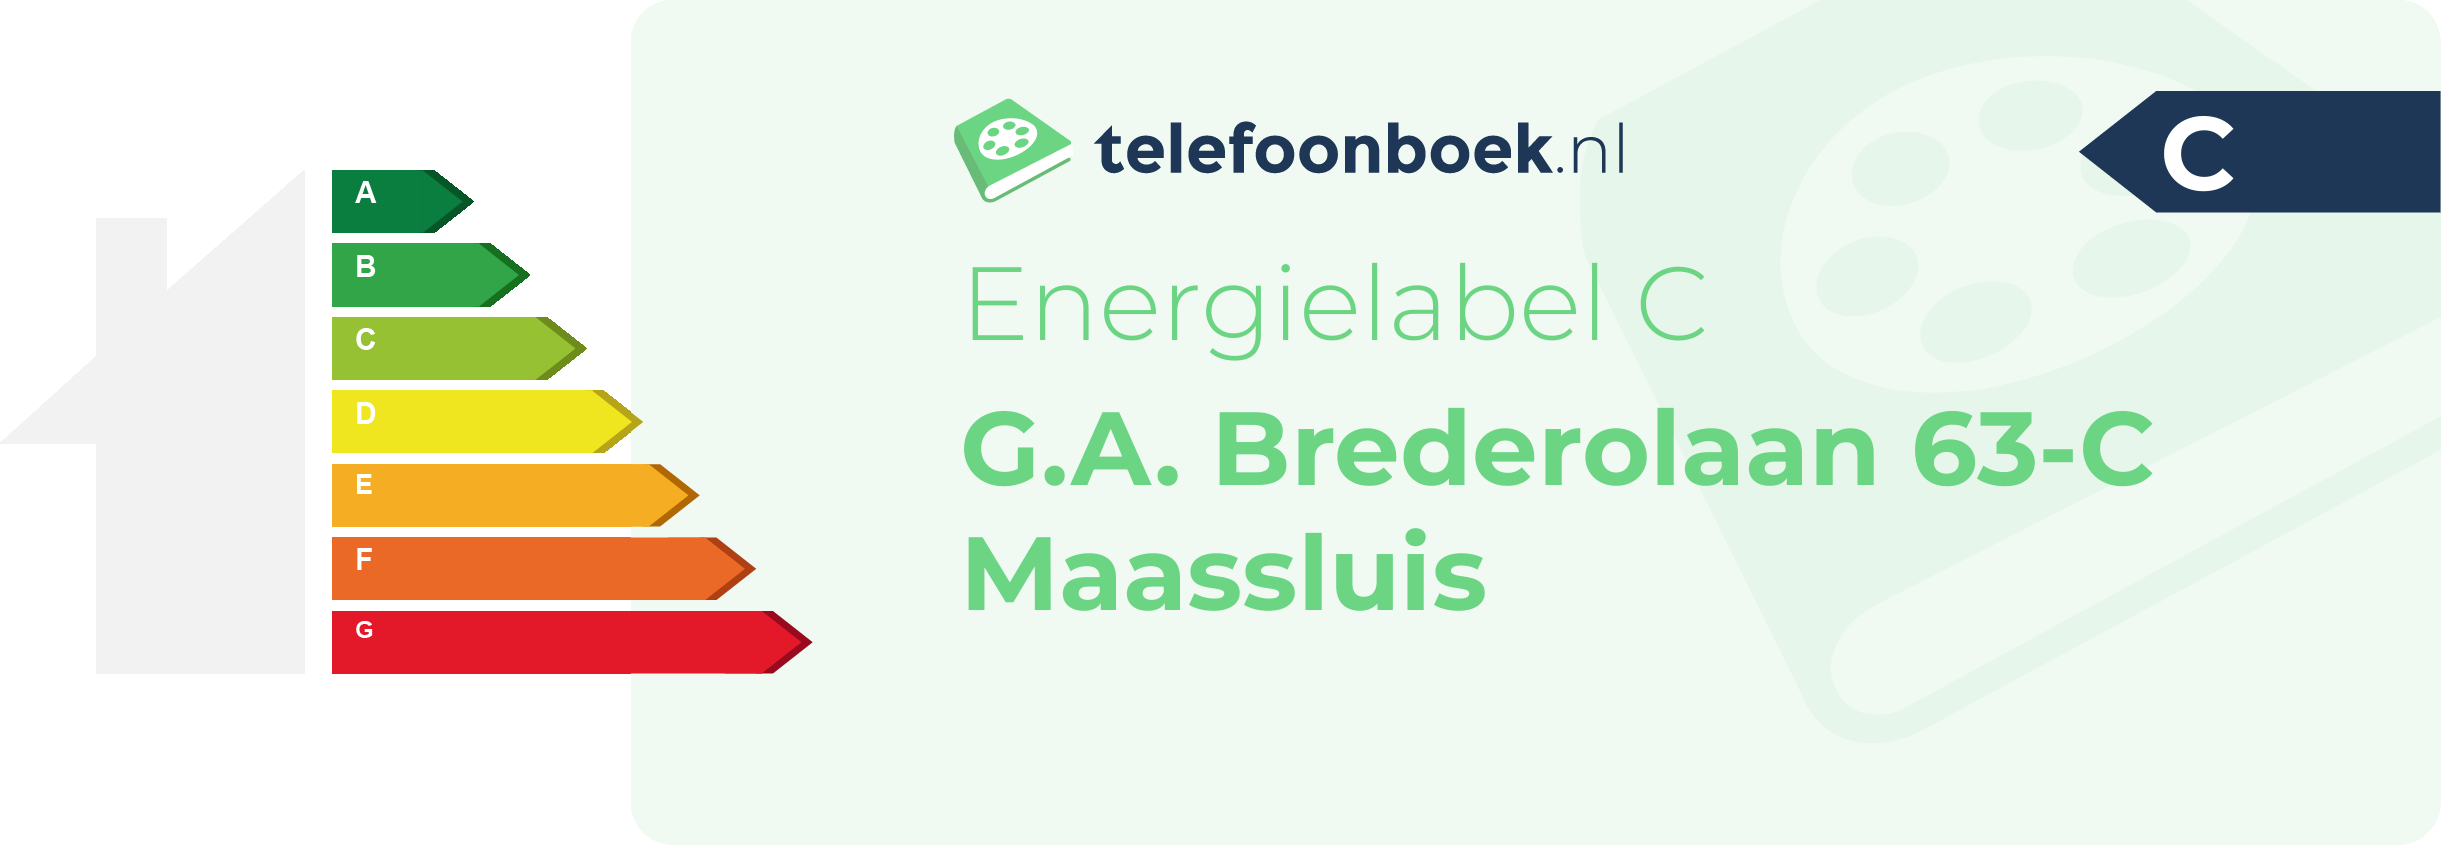 Energielabel G.A. Brederolaan 63-C Maassluis